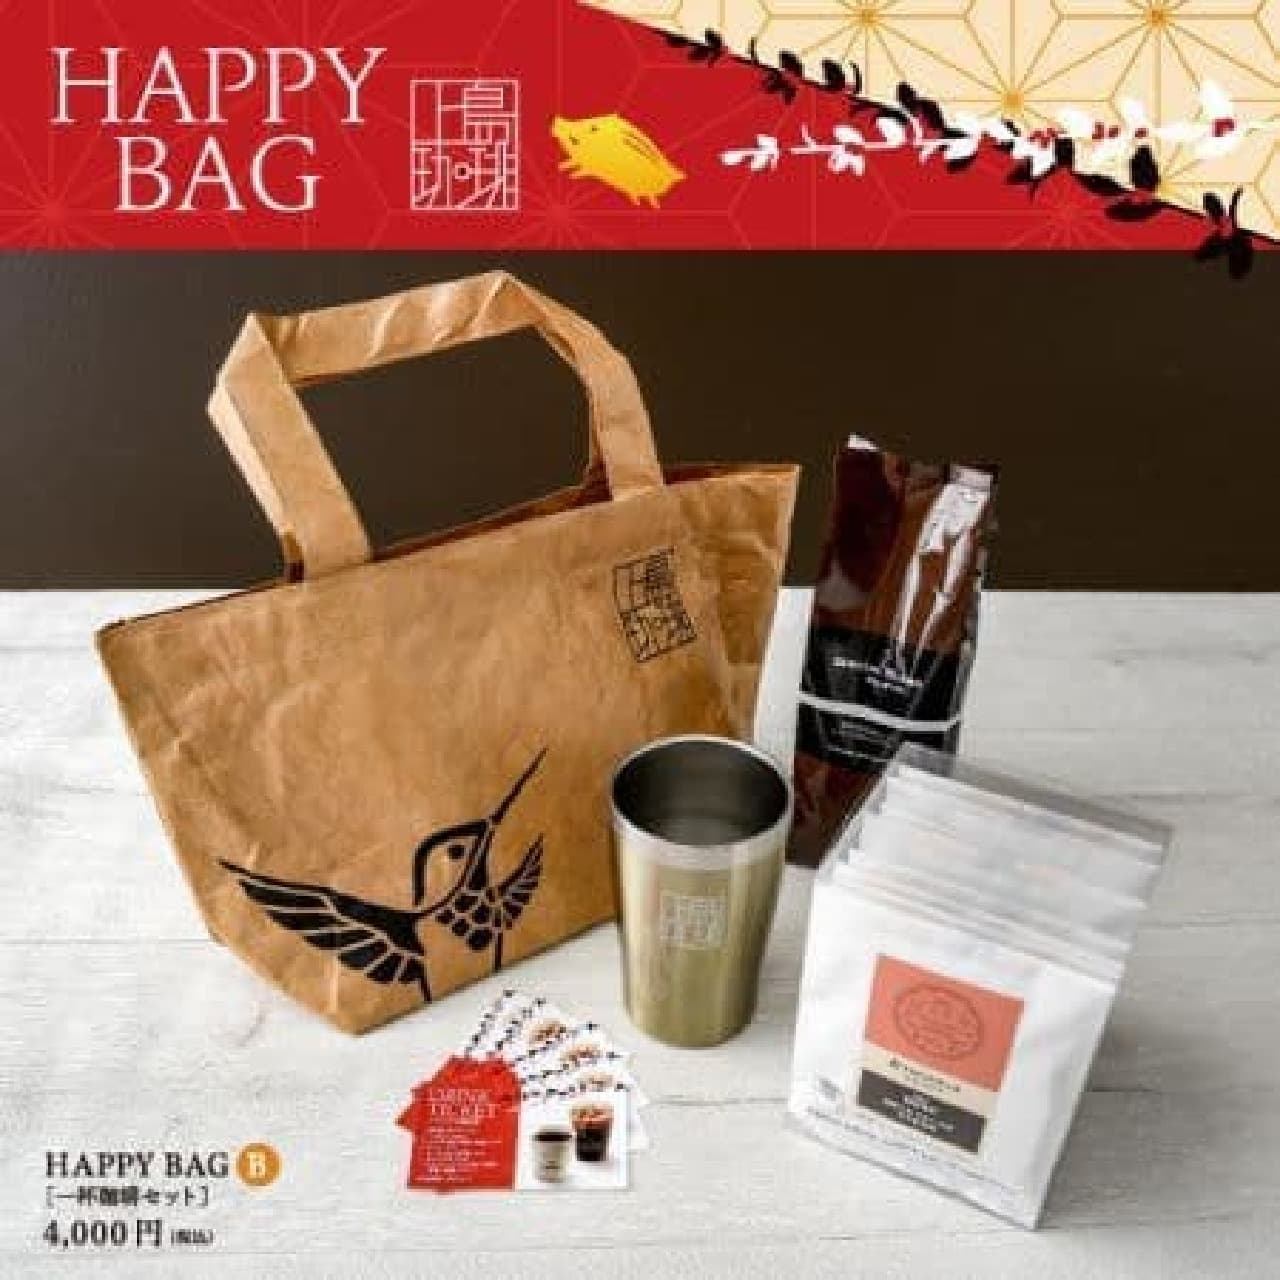 Ueshima Coffee Shop Happy Bag 2019